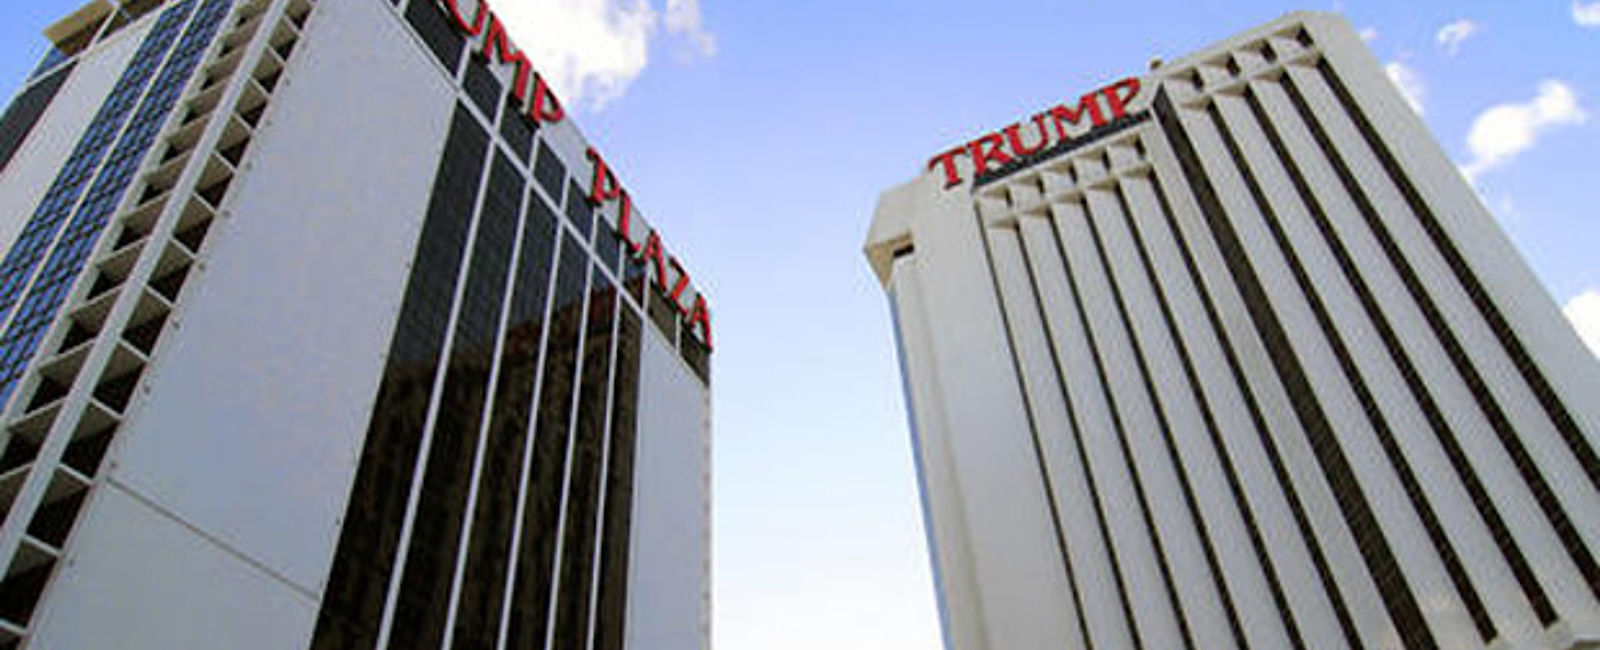 HOTEL TIPPS
 Trump Plaza Hotel 
 Exklusives Kasino-Hotel mit schönem Blick über Atlantic City 